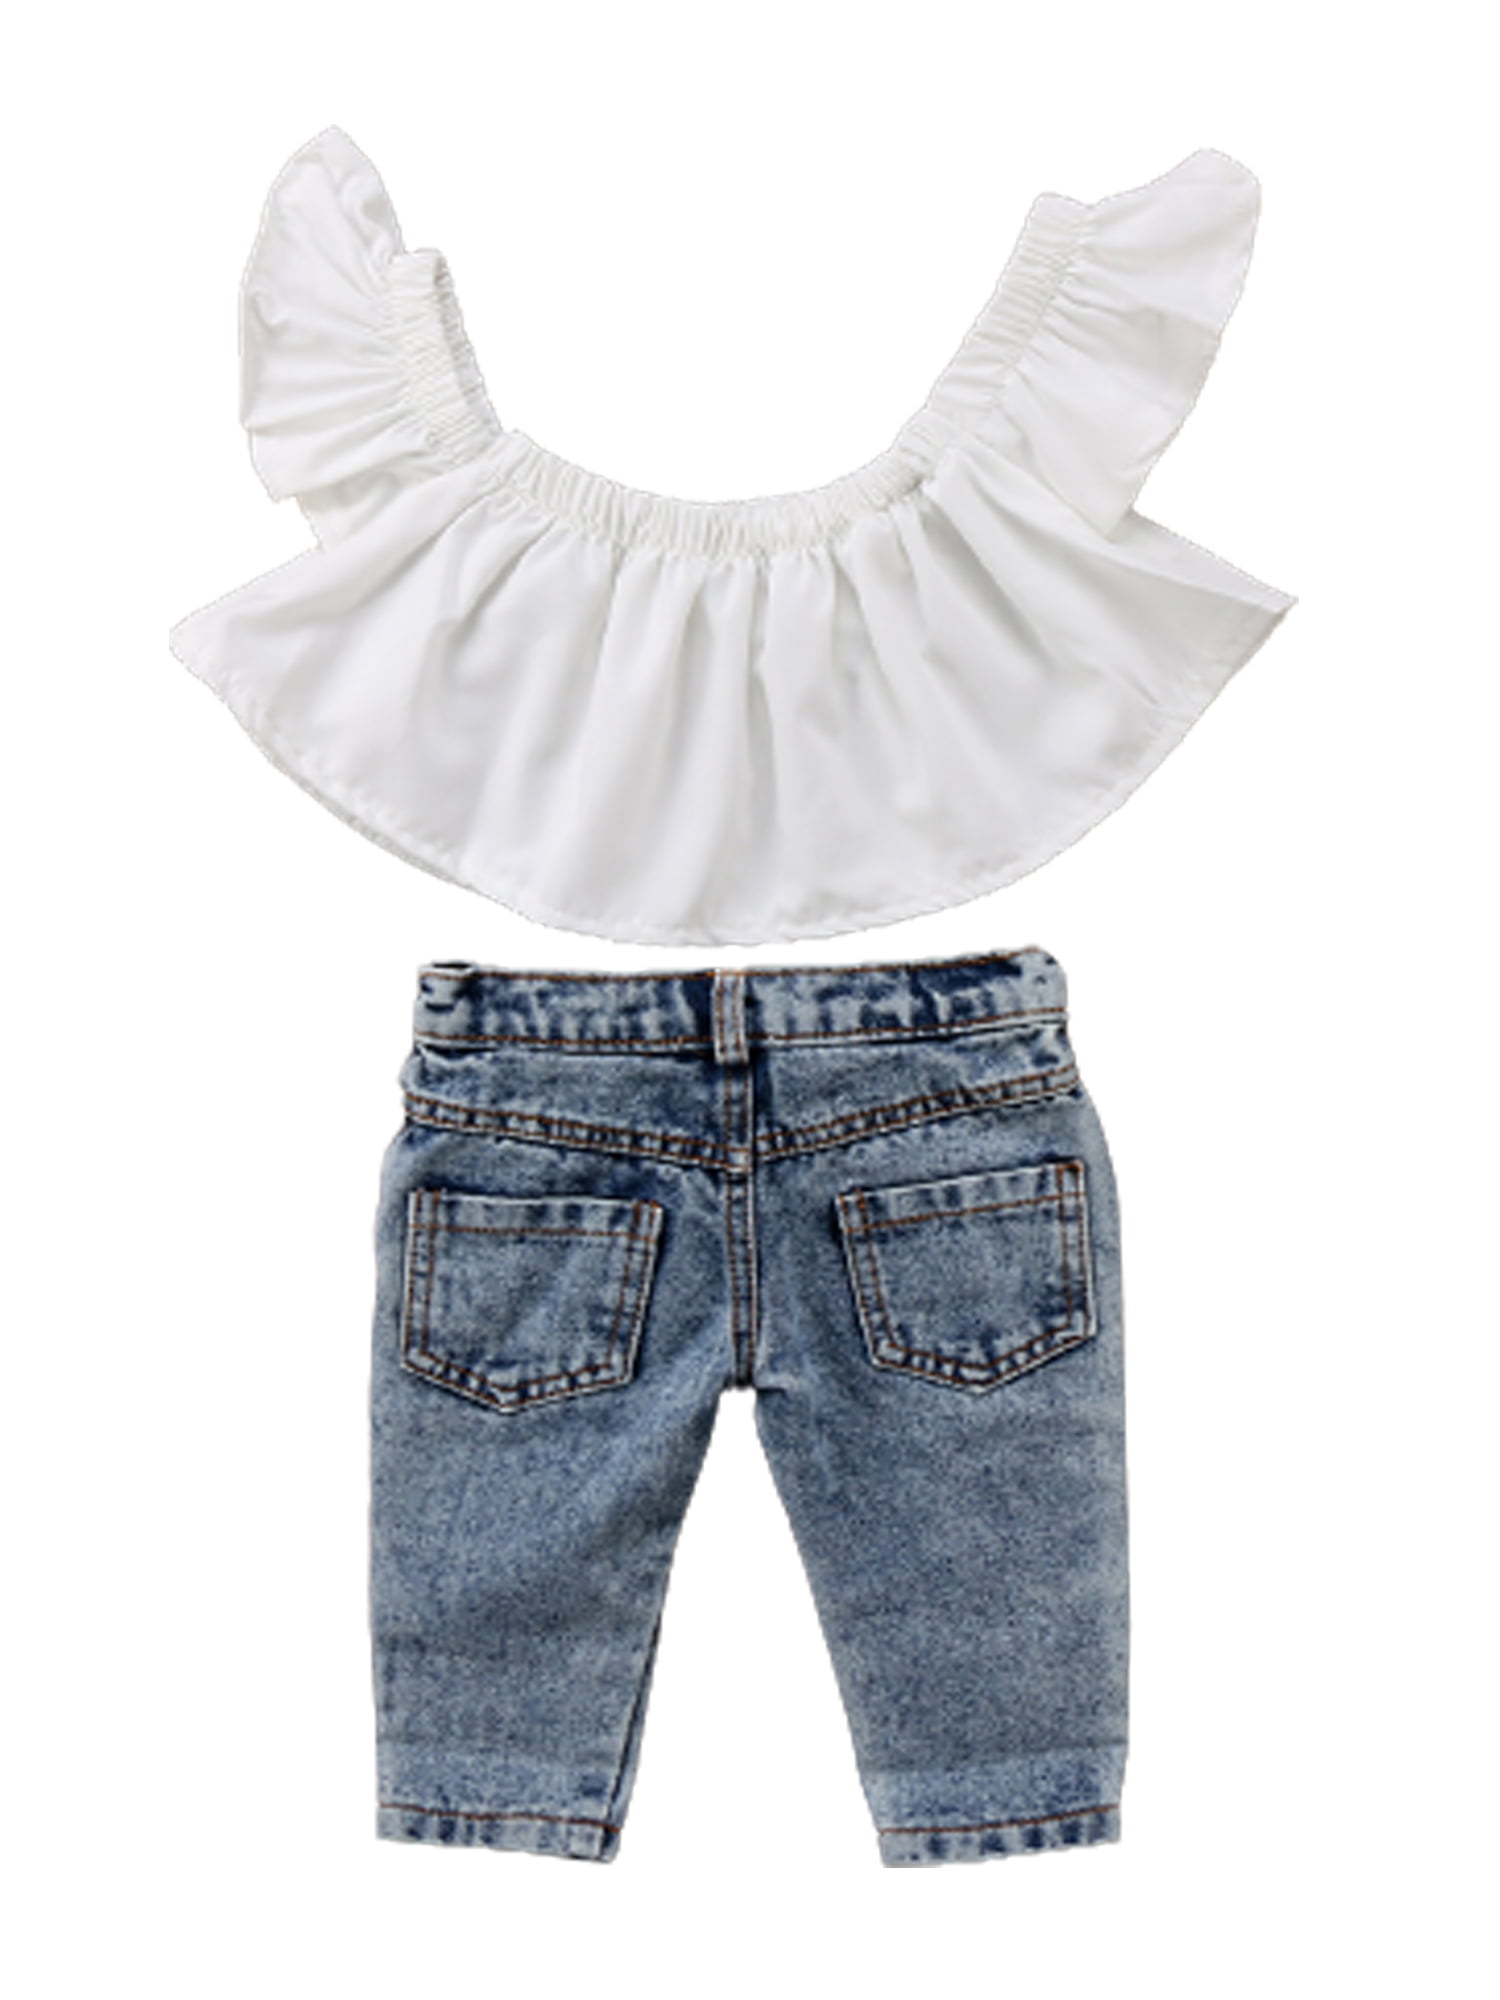 Moonker Infant Toddler Boy Girl Bird Pattern Romper Tops Floral Pants Outfits Clothes Set